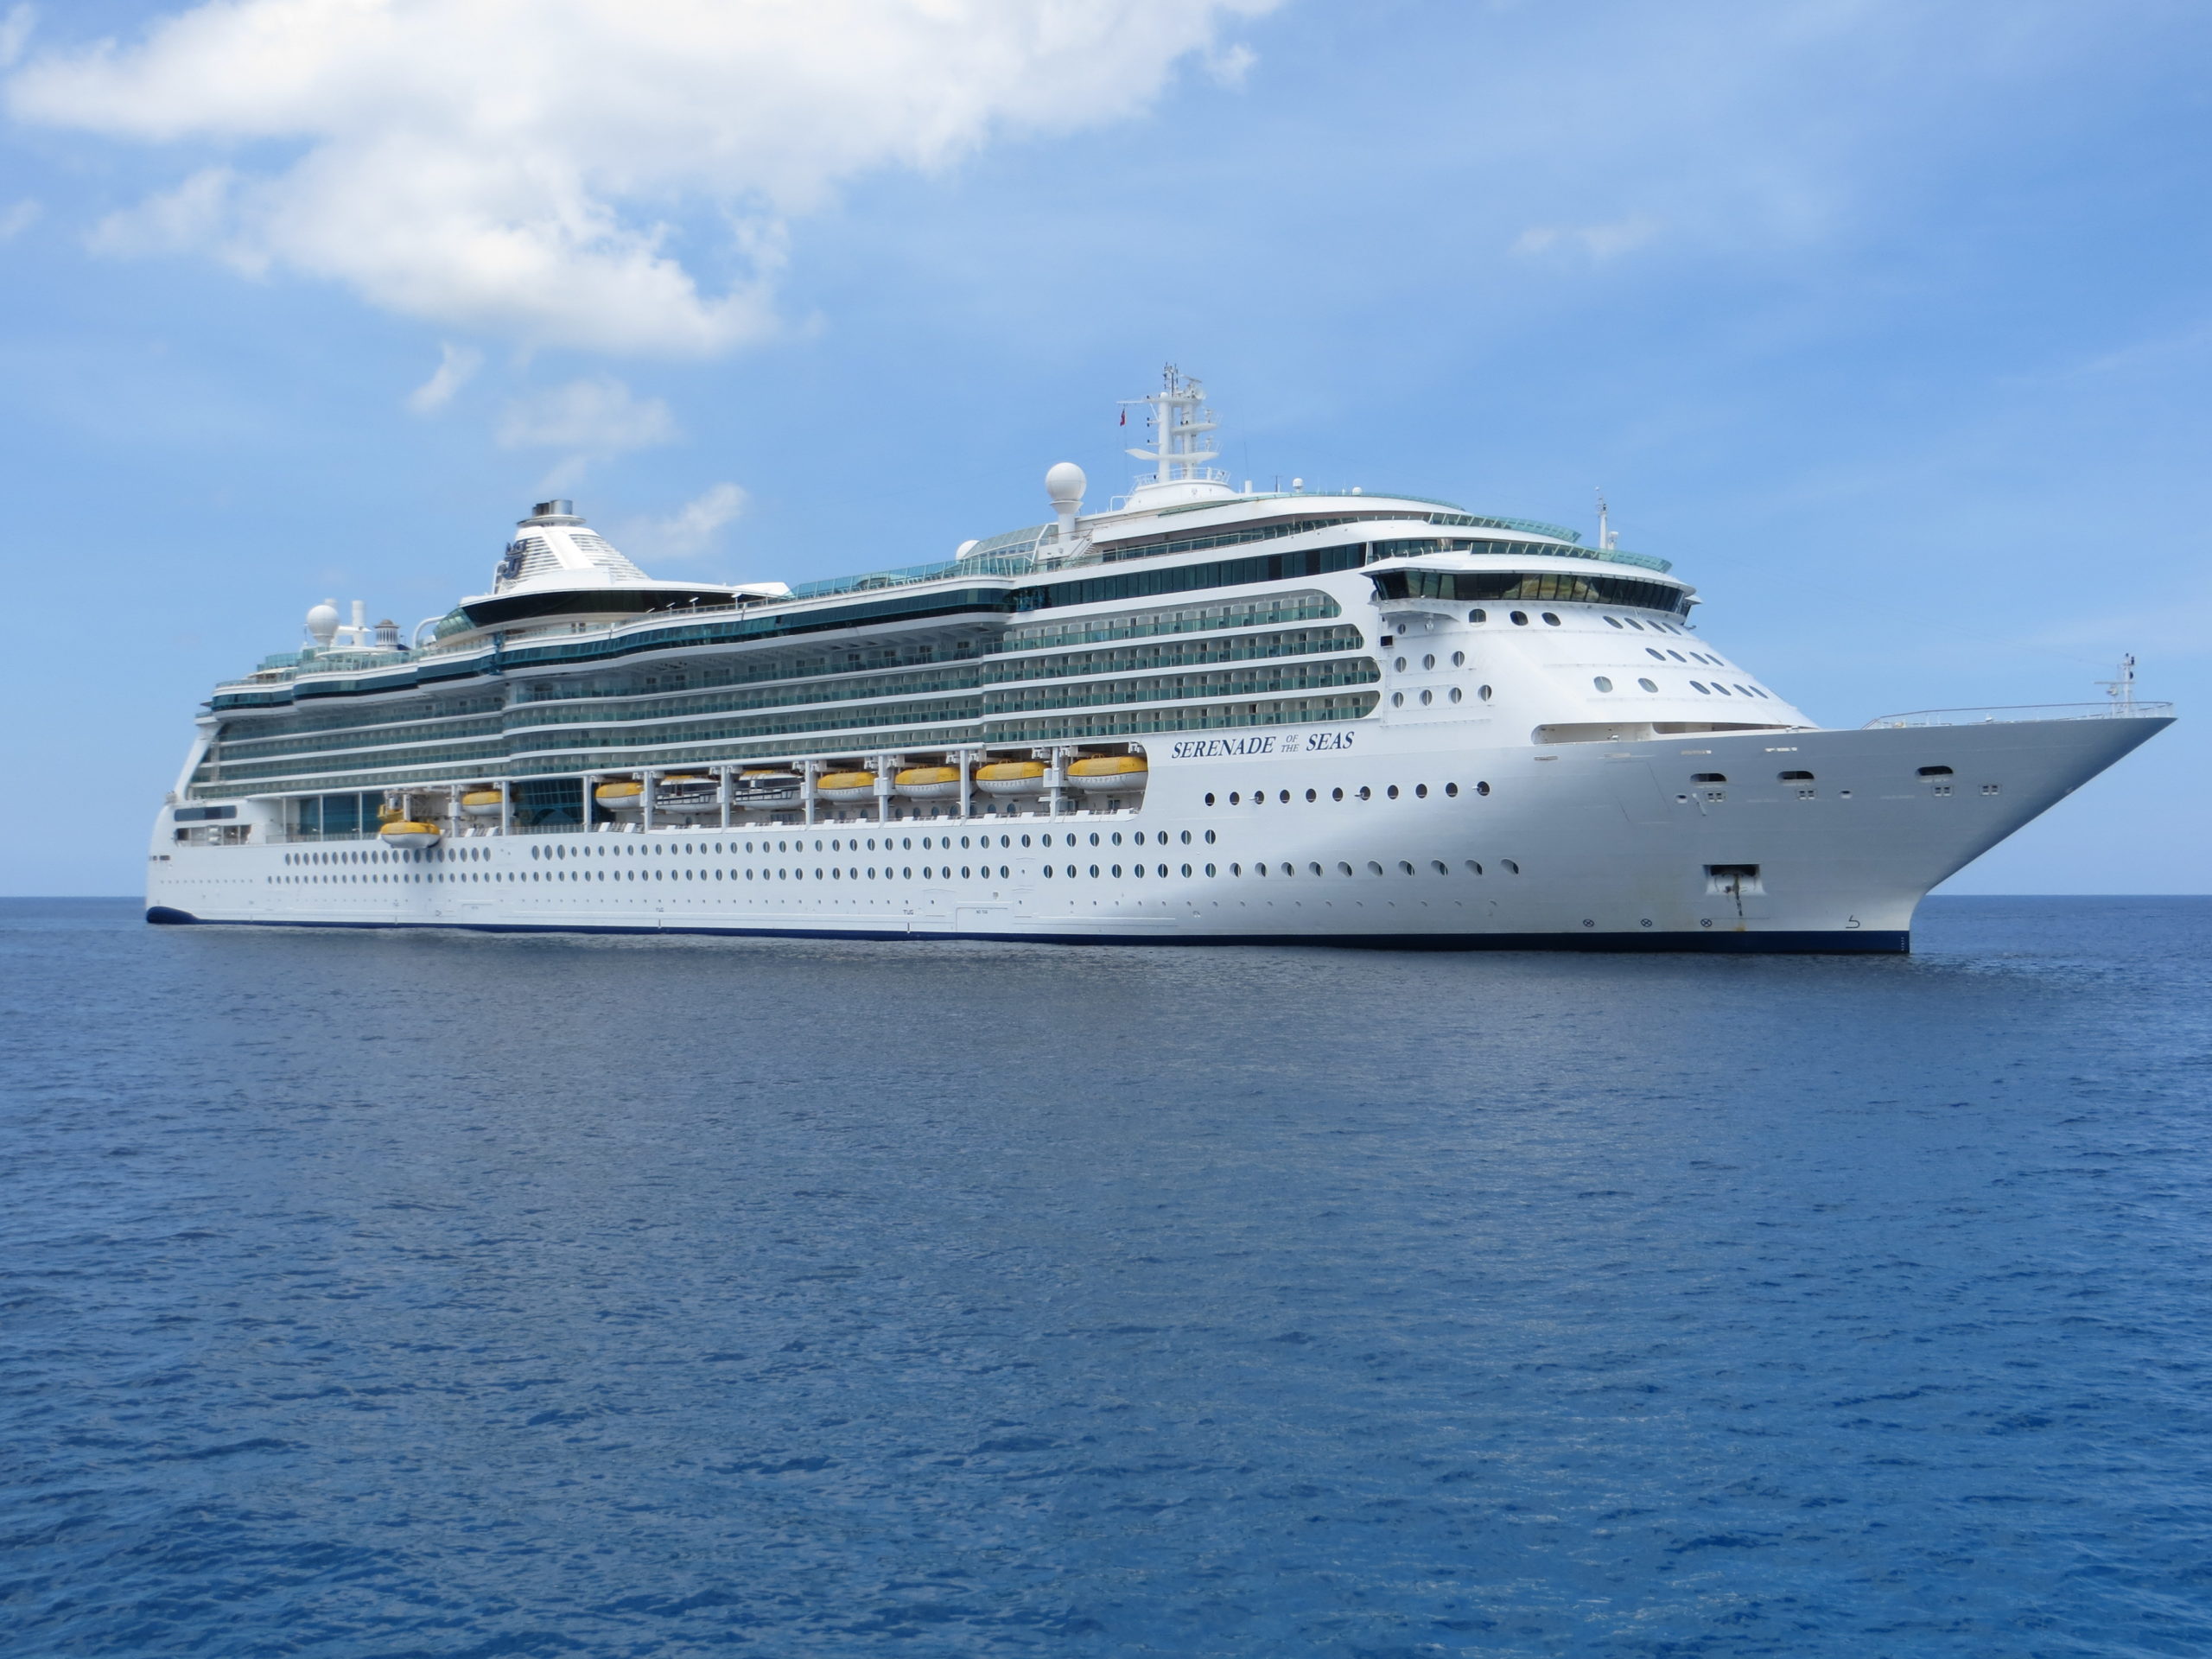 Cruise ship Serenade of the Seas - Royal Caribbean International